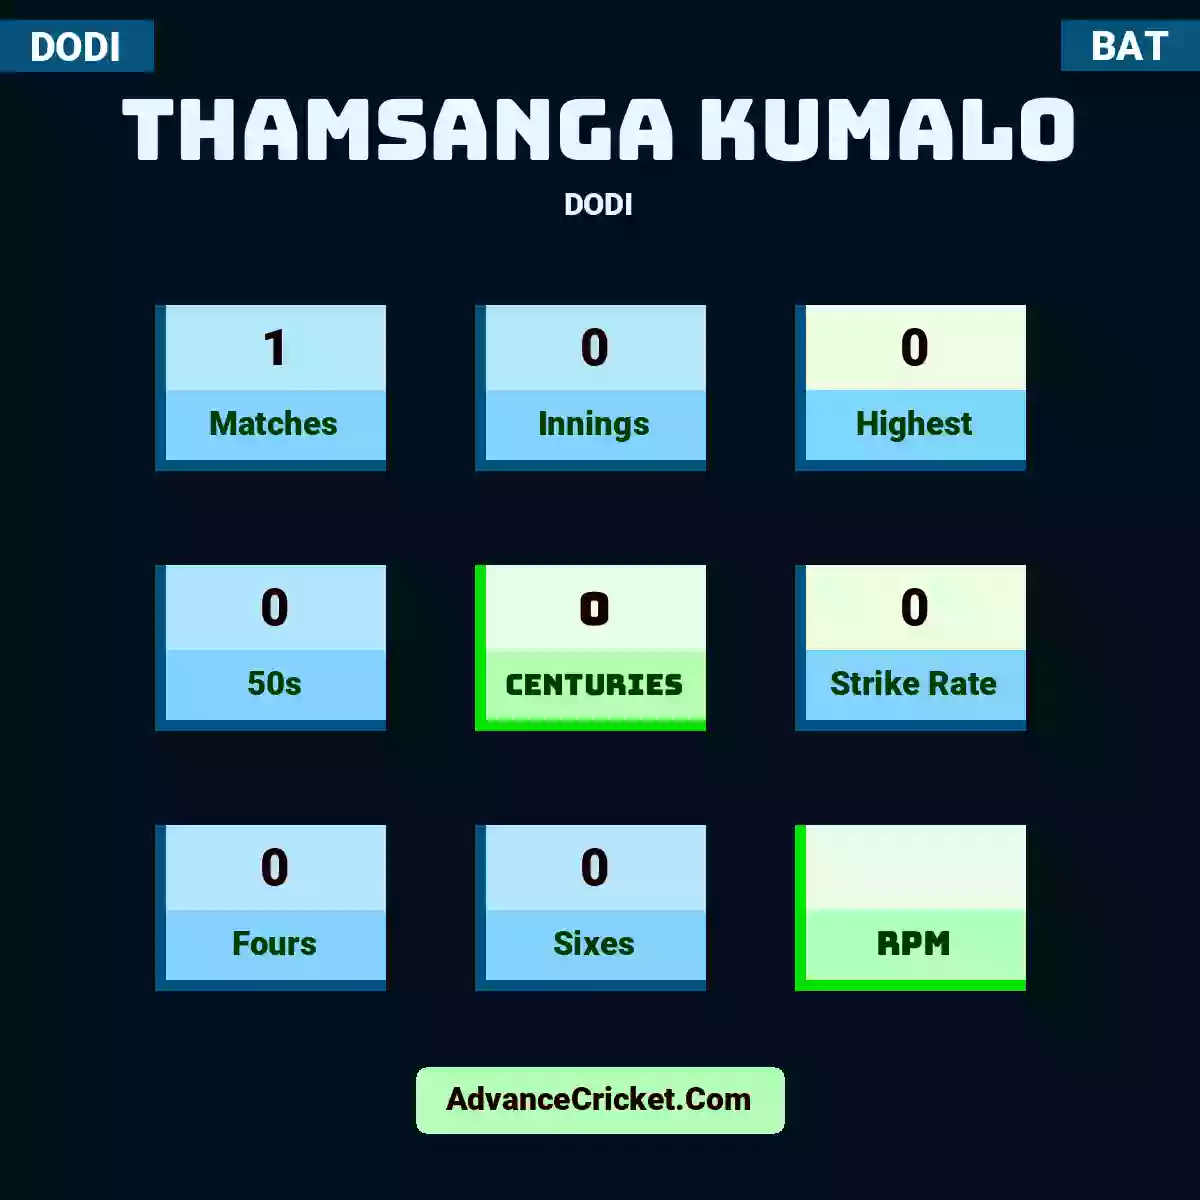 Thamsanga Kumalo DODI , Thamsanga Kumalo played 1 matches, scored 0 runs as highest, 0 half-centuries, and 0 centuries, with a strike rate of 0. T.Kumalo hit 0 fours and 0 sixes.